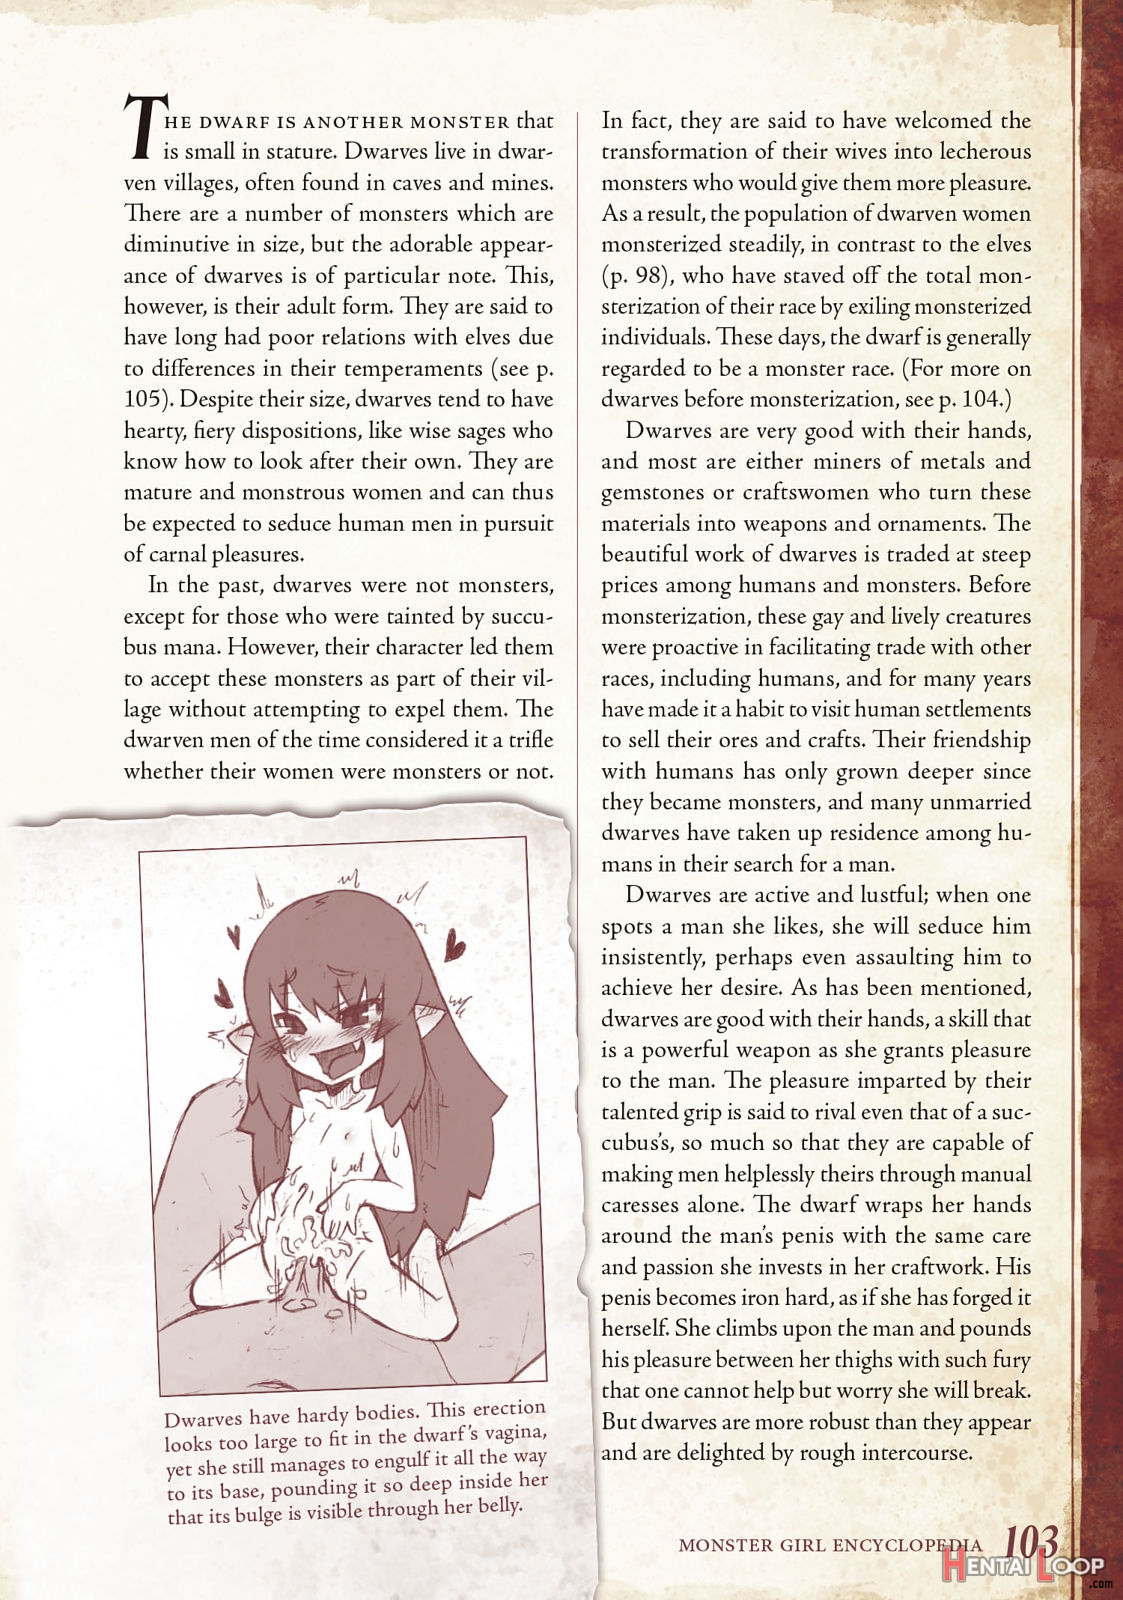 Monster Girl Encyclopedia Vol. 1 page 104